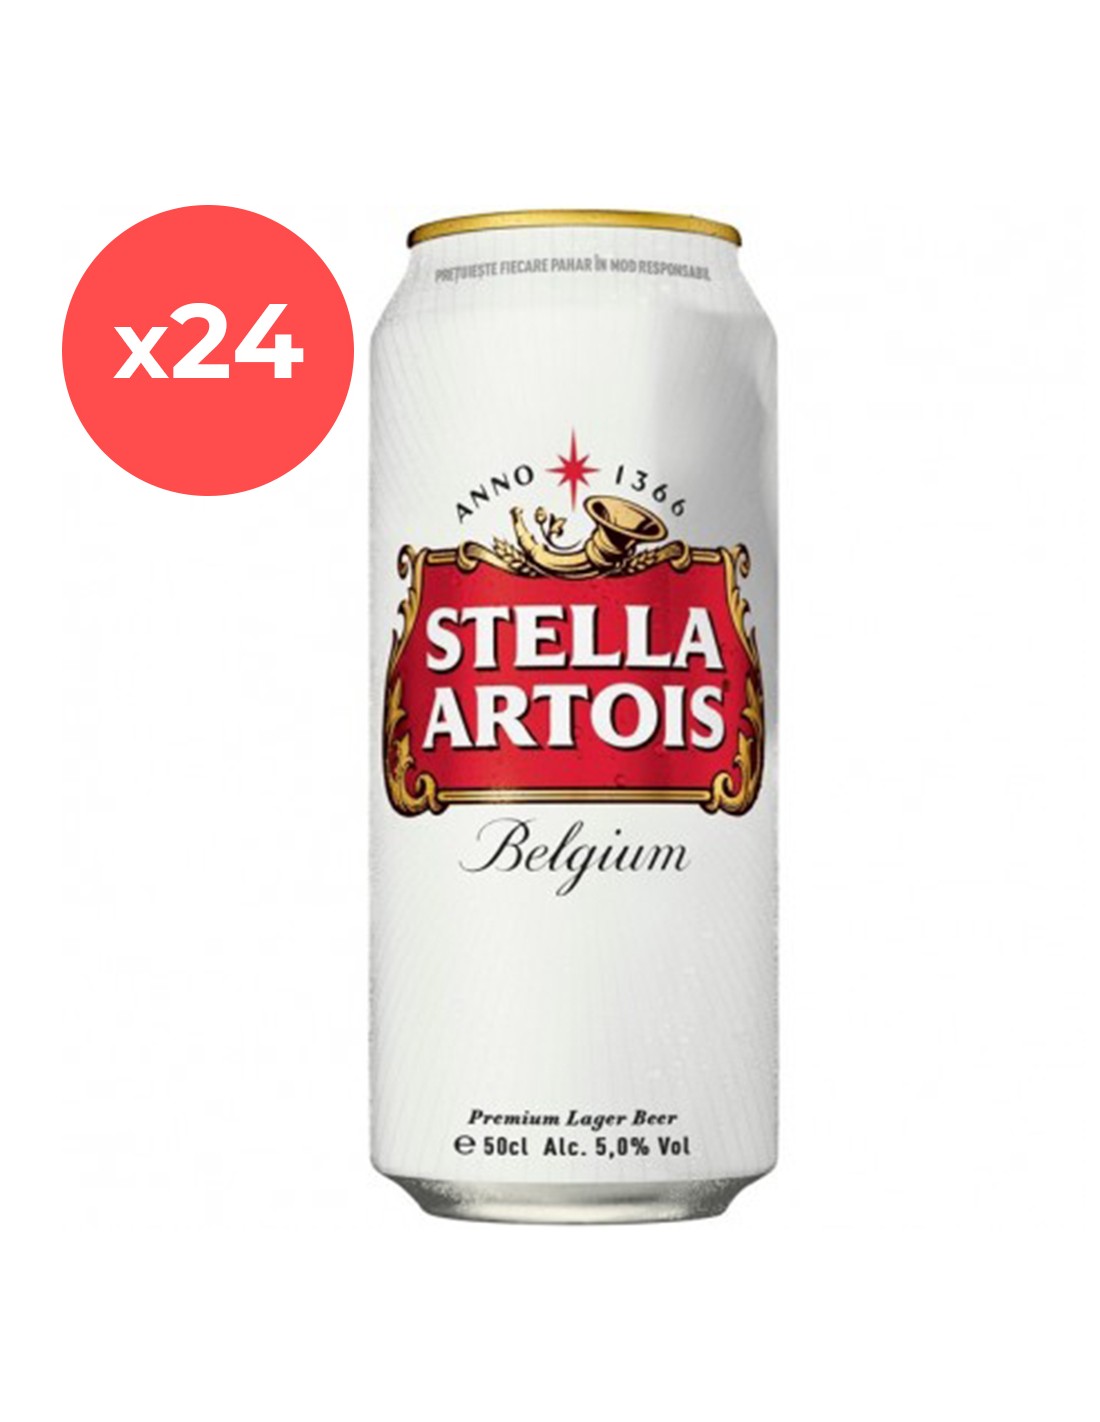 Bax 24 bucati bere blonda Stella Artois, 5% alc., 0.5L, doza, Belgia